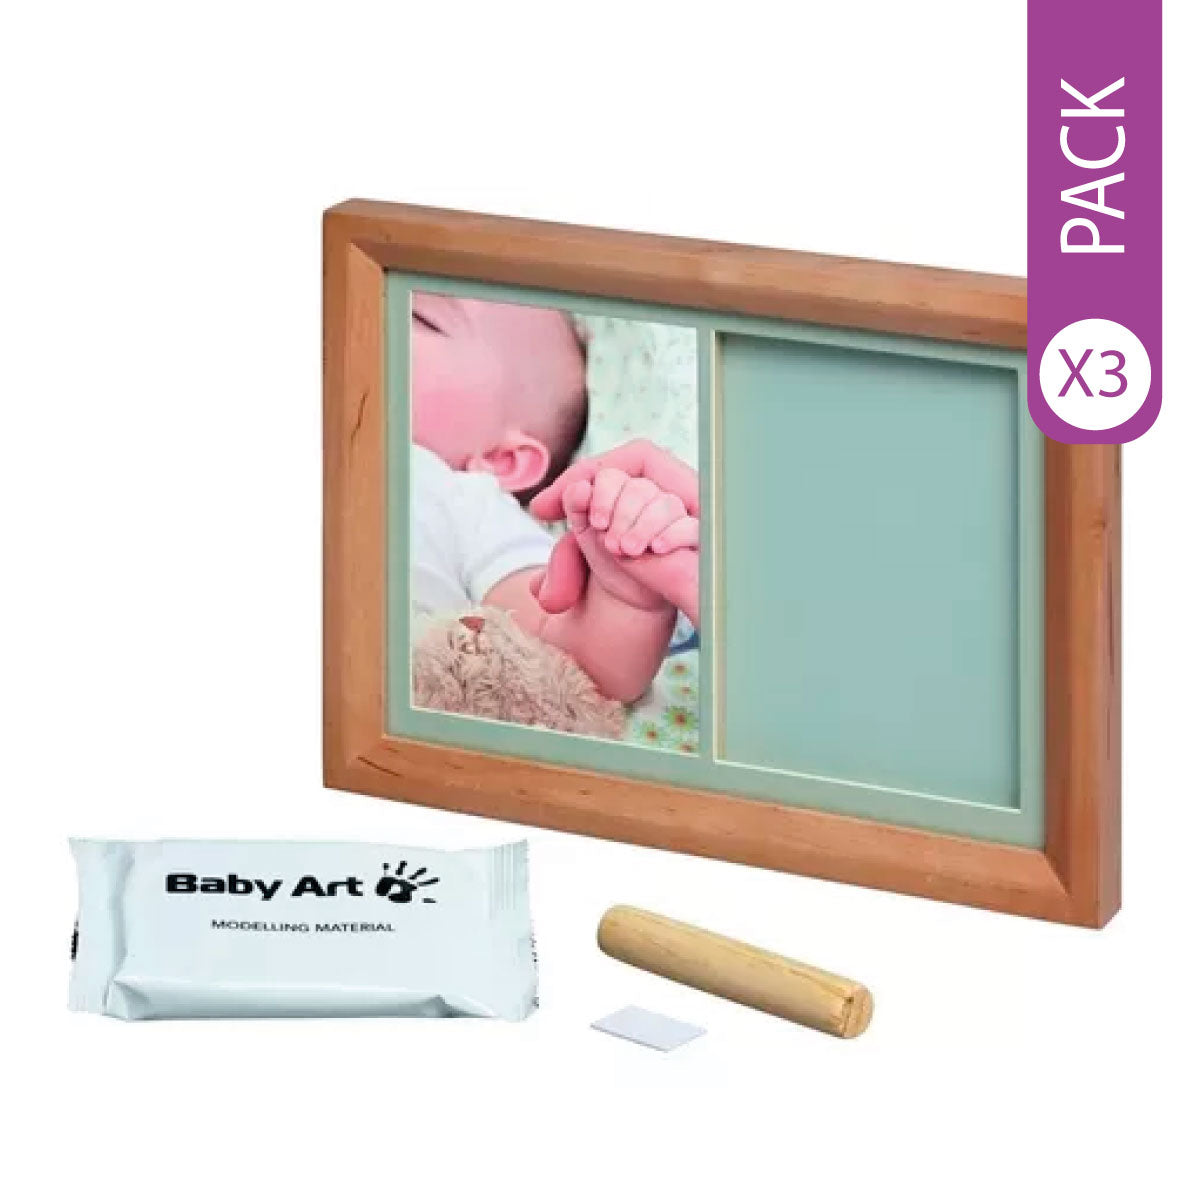 Pack de 3 marcos recuerdos honey para bebés baby art [Openbox]